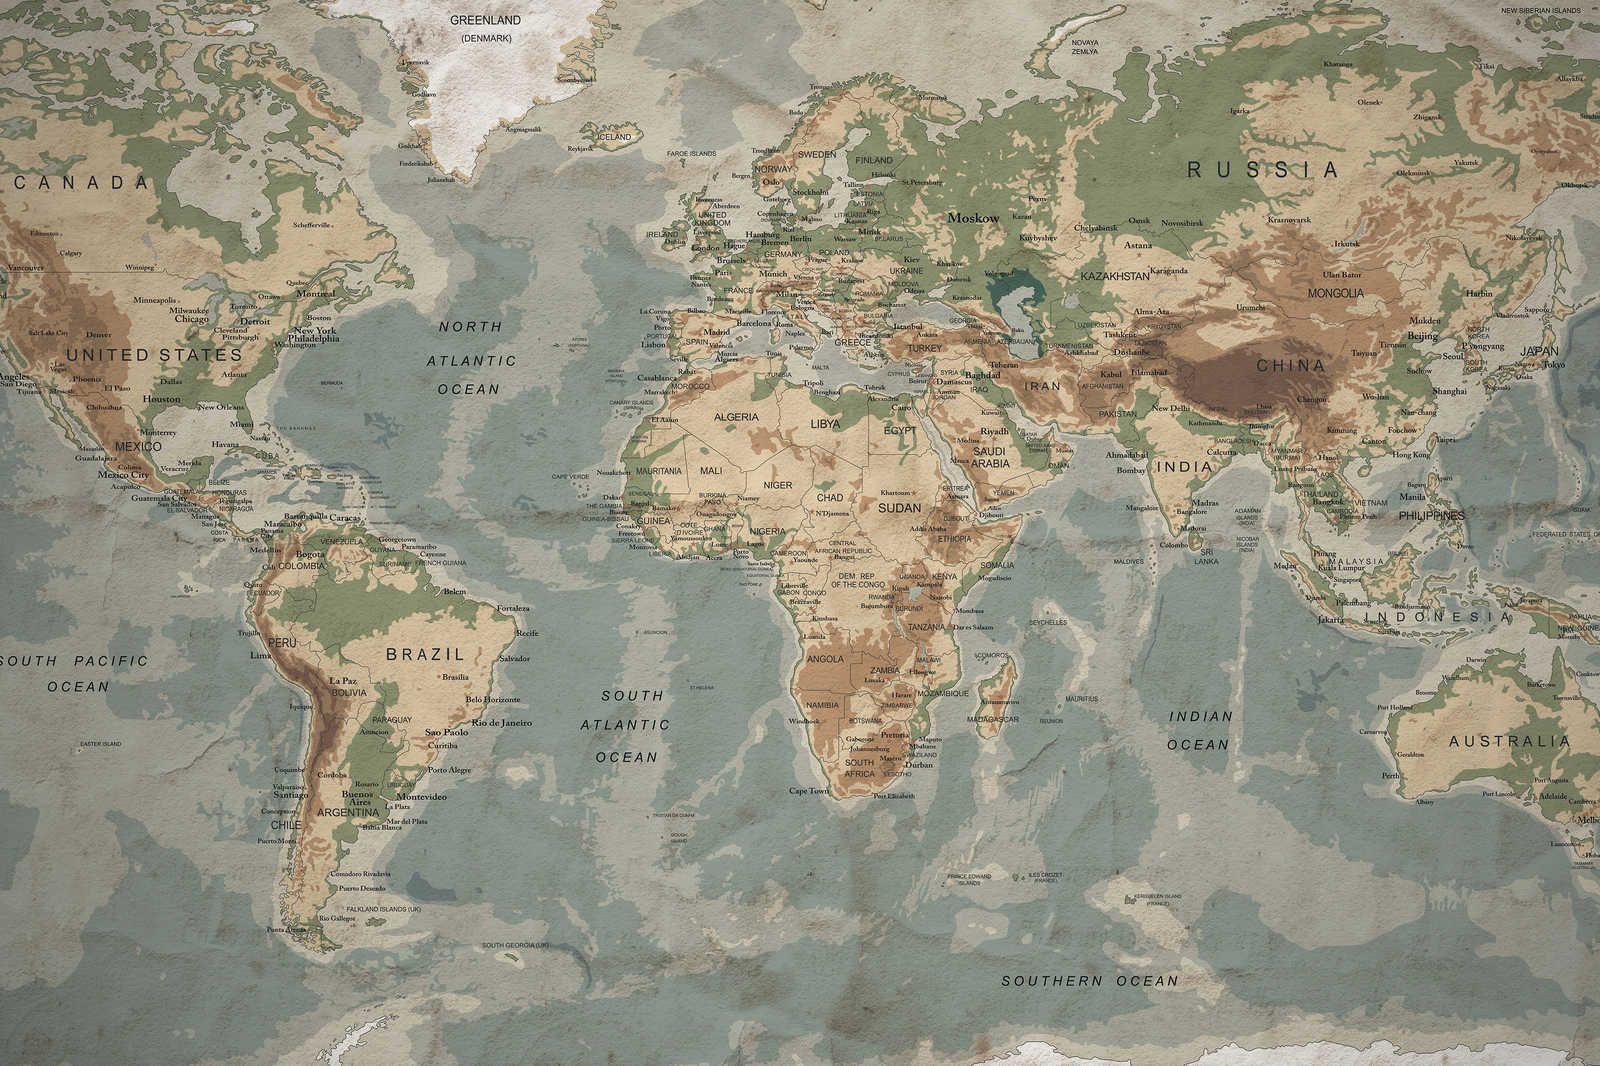             Retro Canvas Painting World Map with Typographic Design - 0.90 m x 0.60 m
        